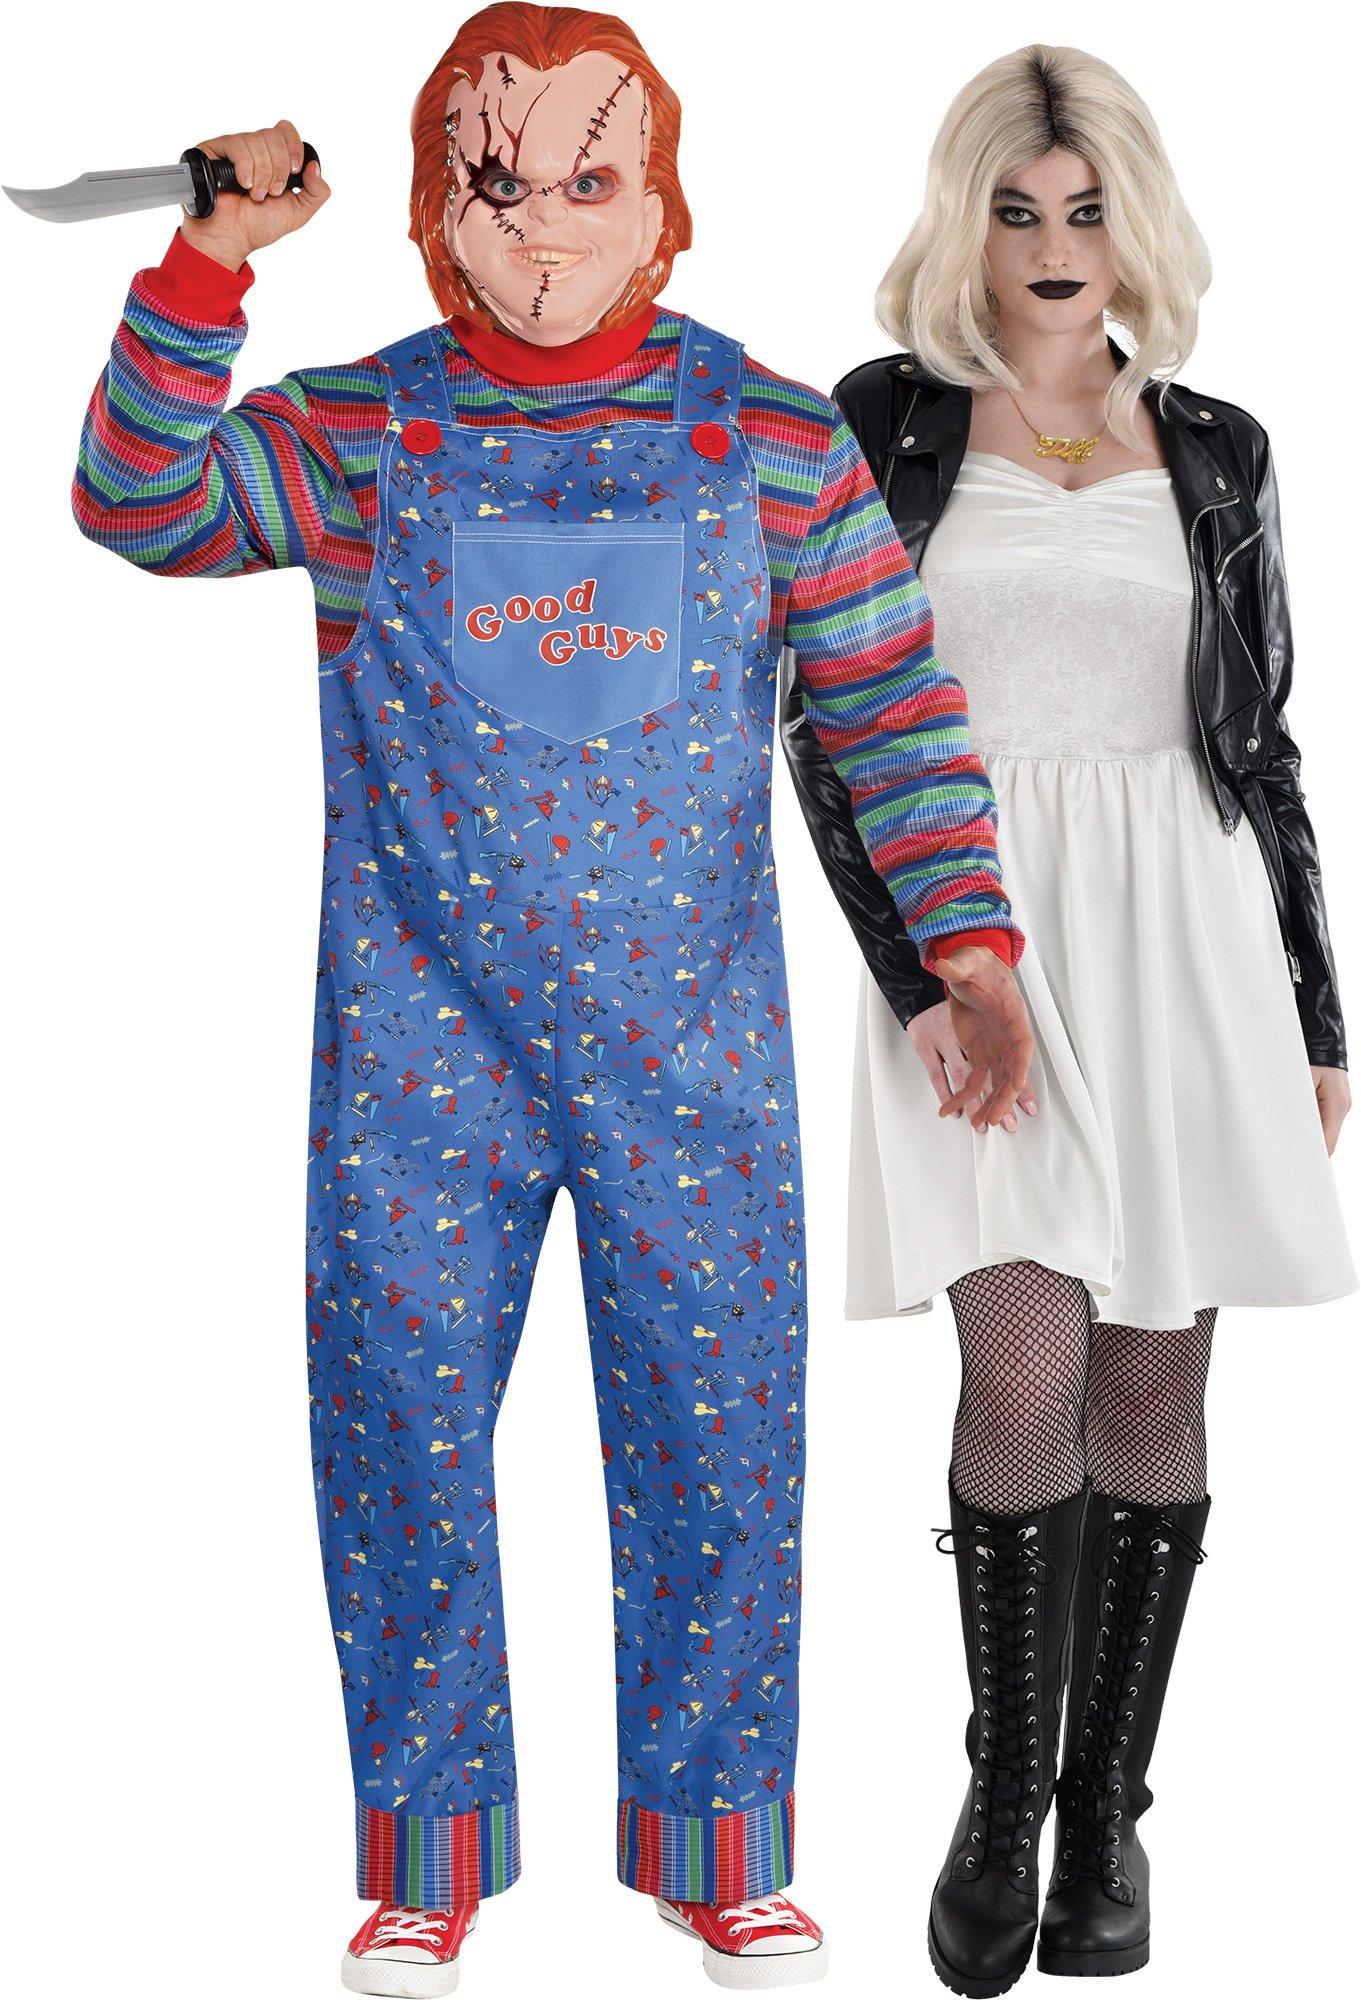 Toddler Tiffany Costume - Chucky 